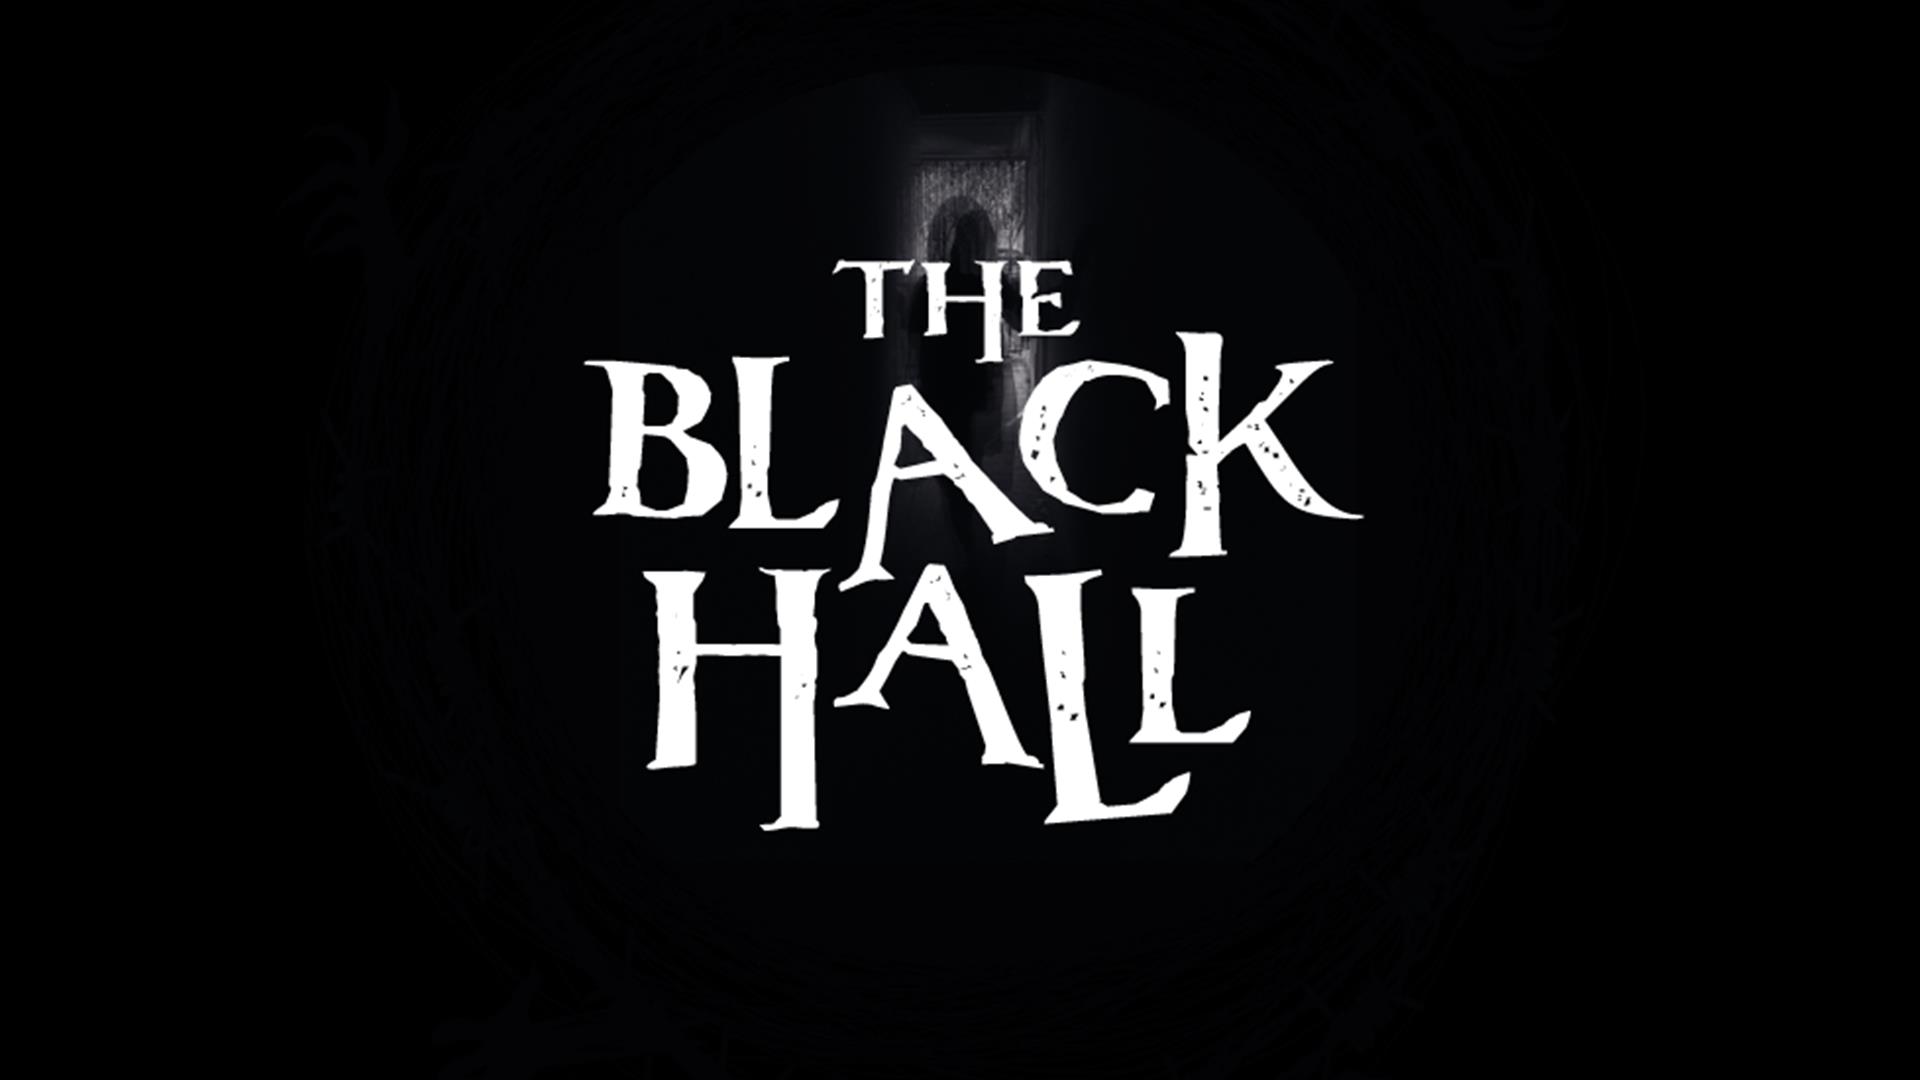 The Black Hall